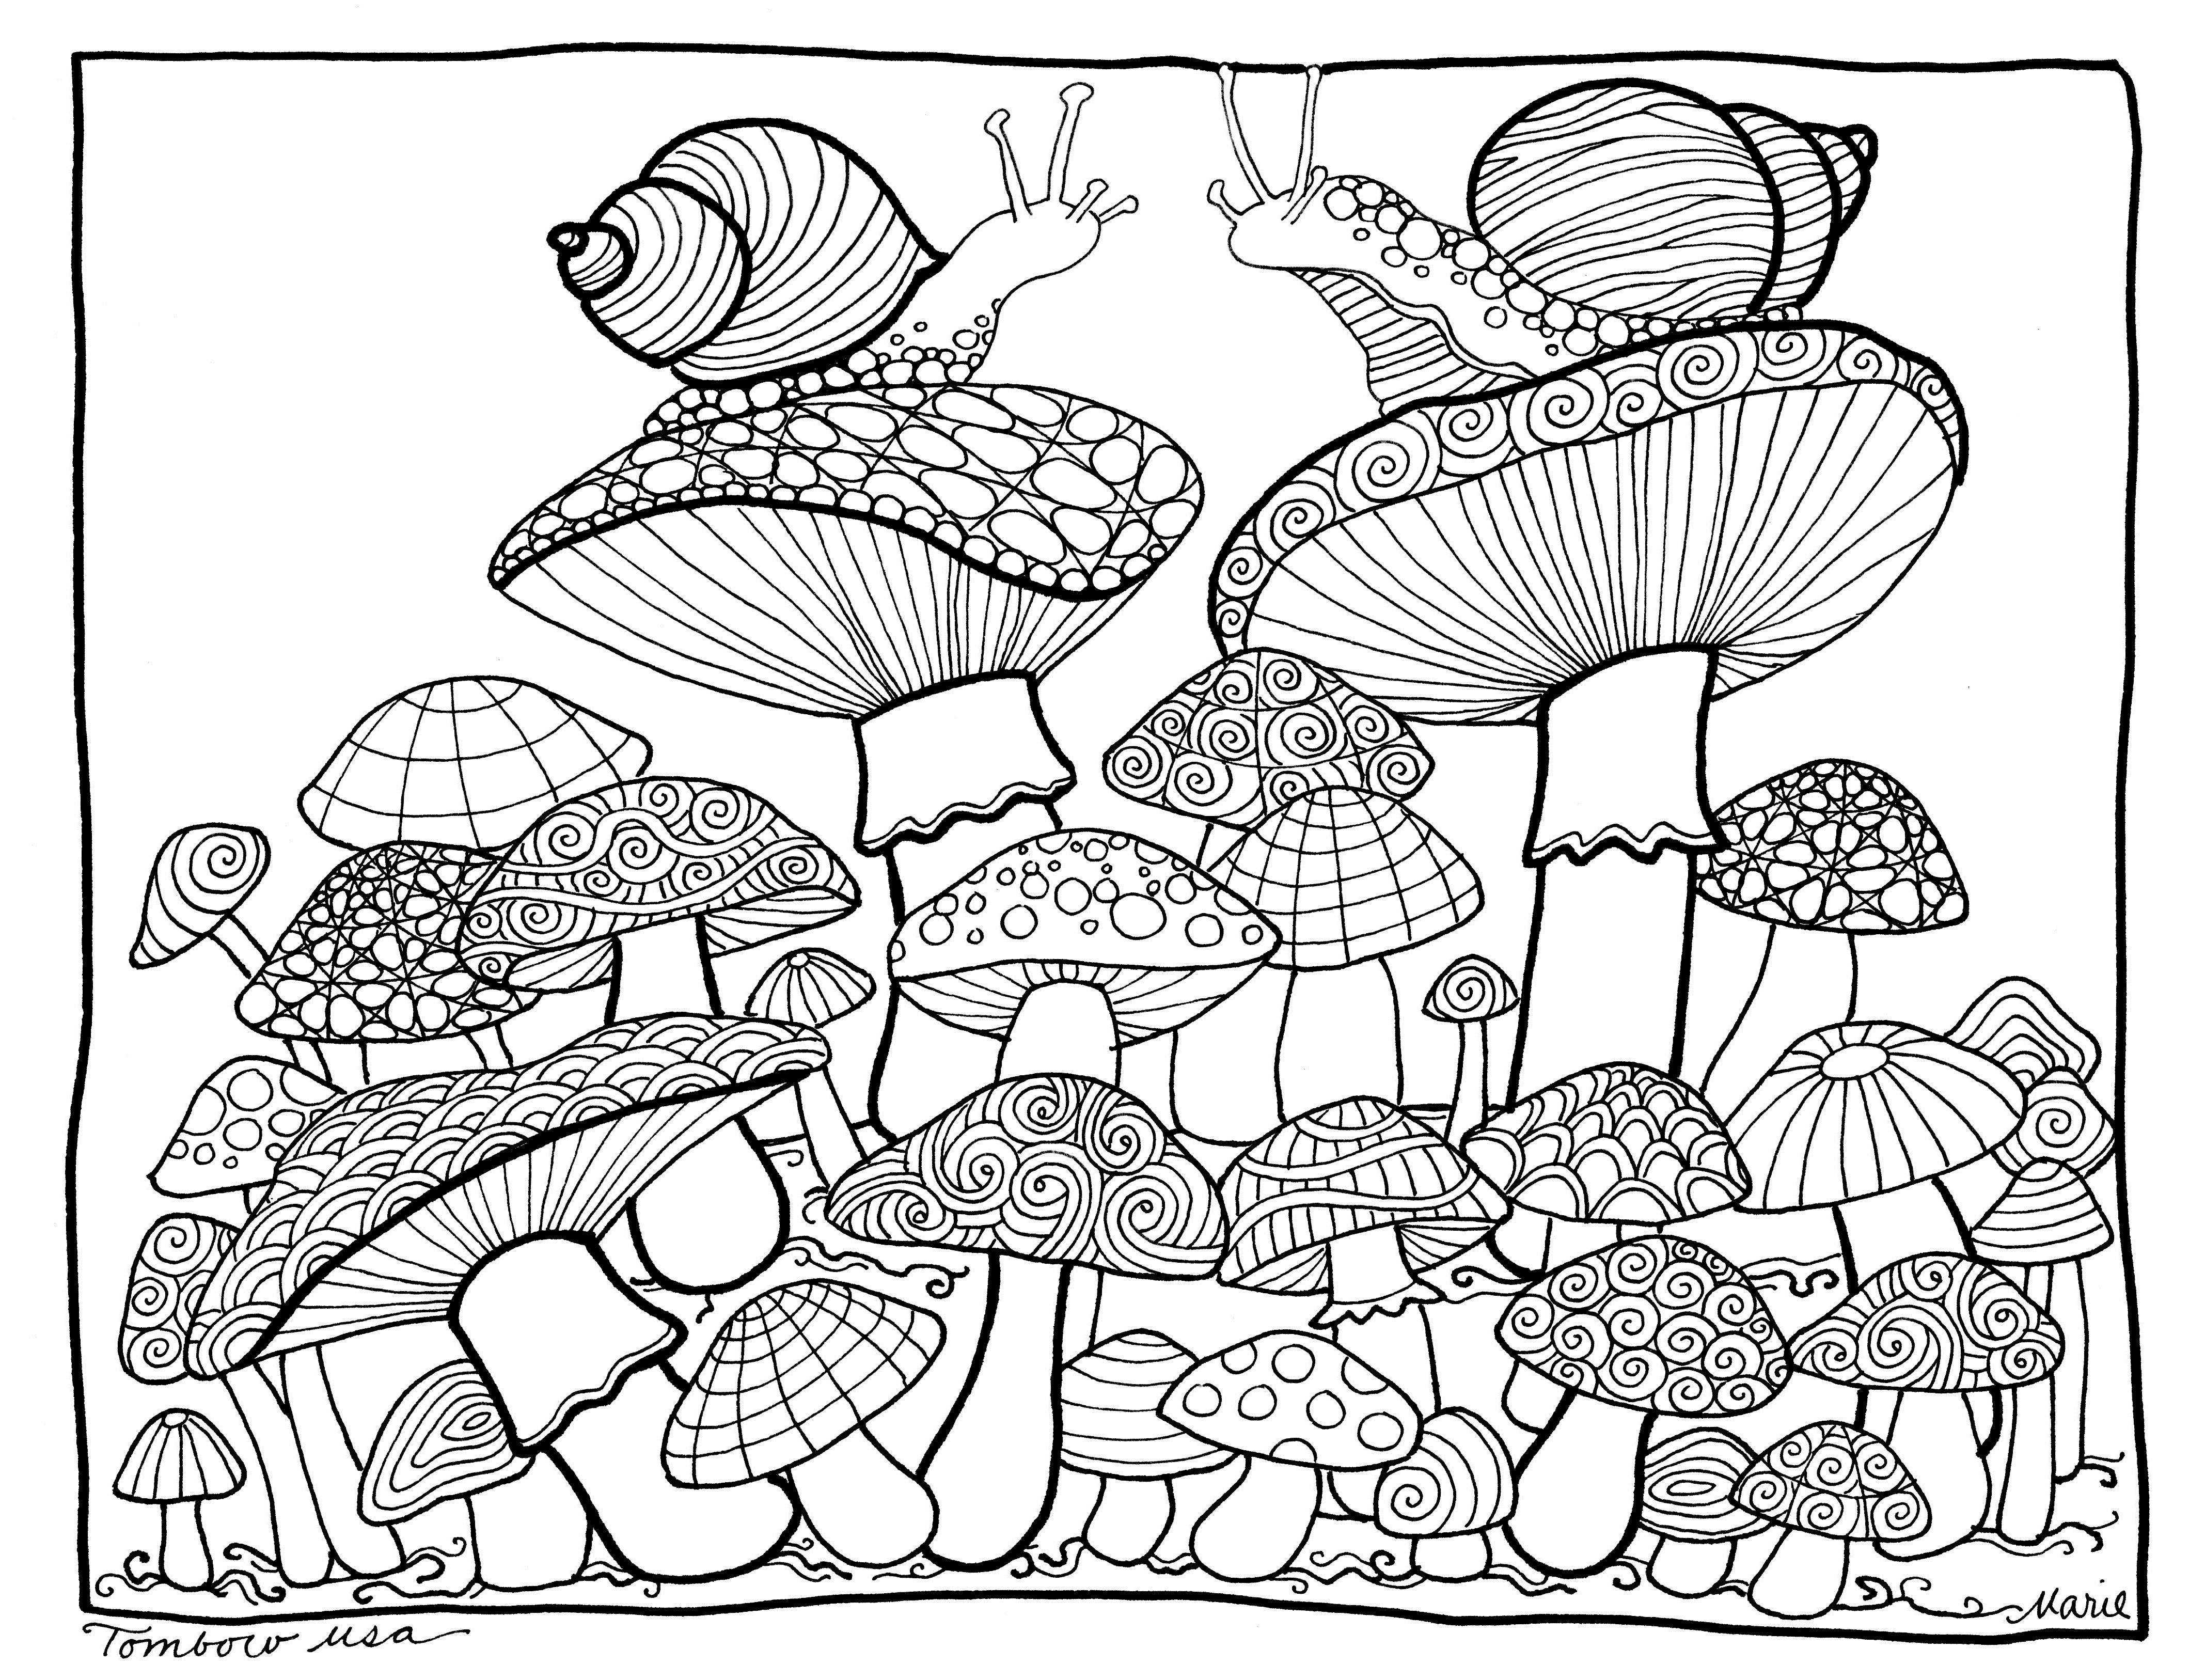 Free Printable Mushroom Coloring Pages At Getdrawings Free Download.